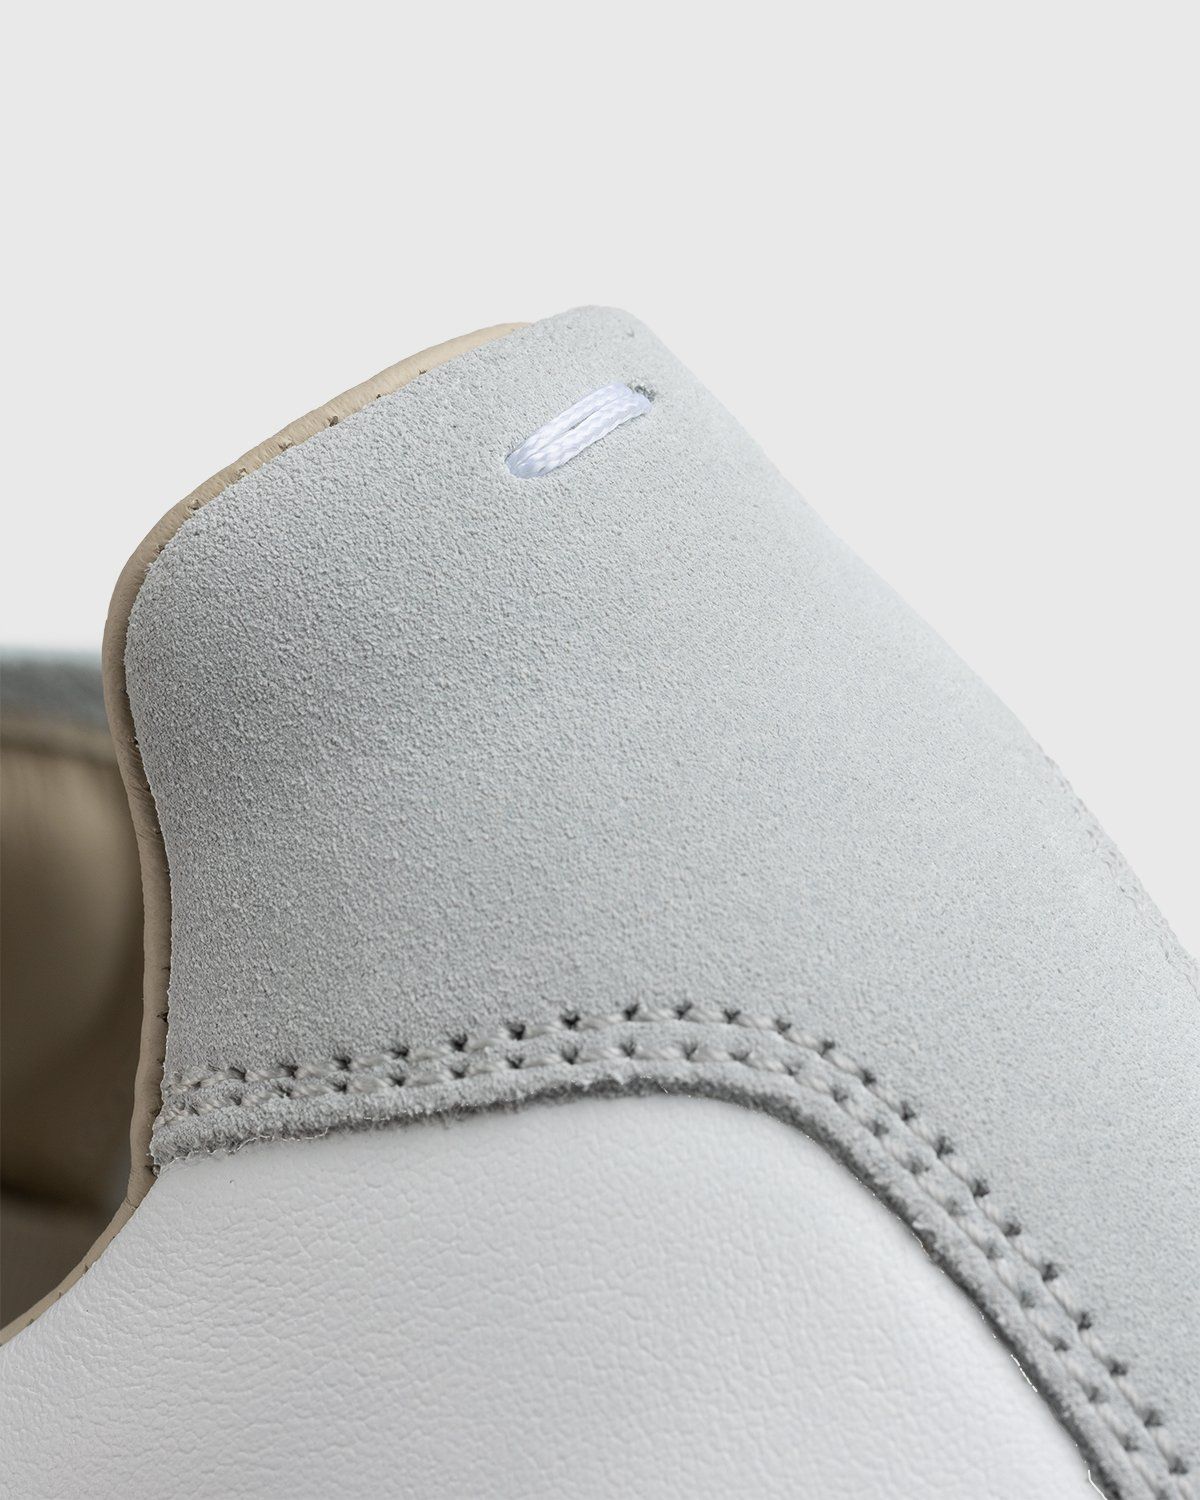 Maison Margiela – Replica Paint Drop Sneakers White - Sneakers - White - Image 5